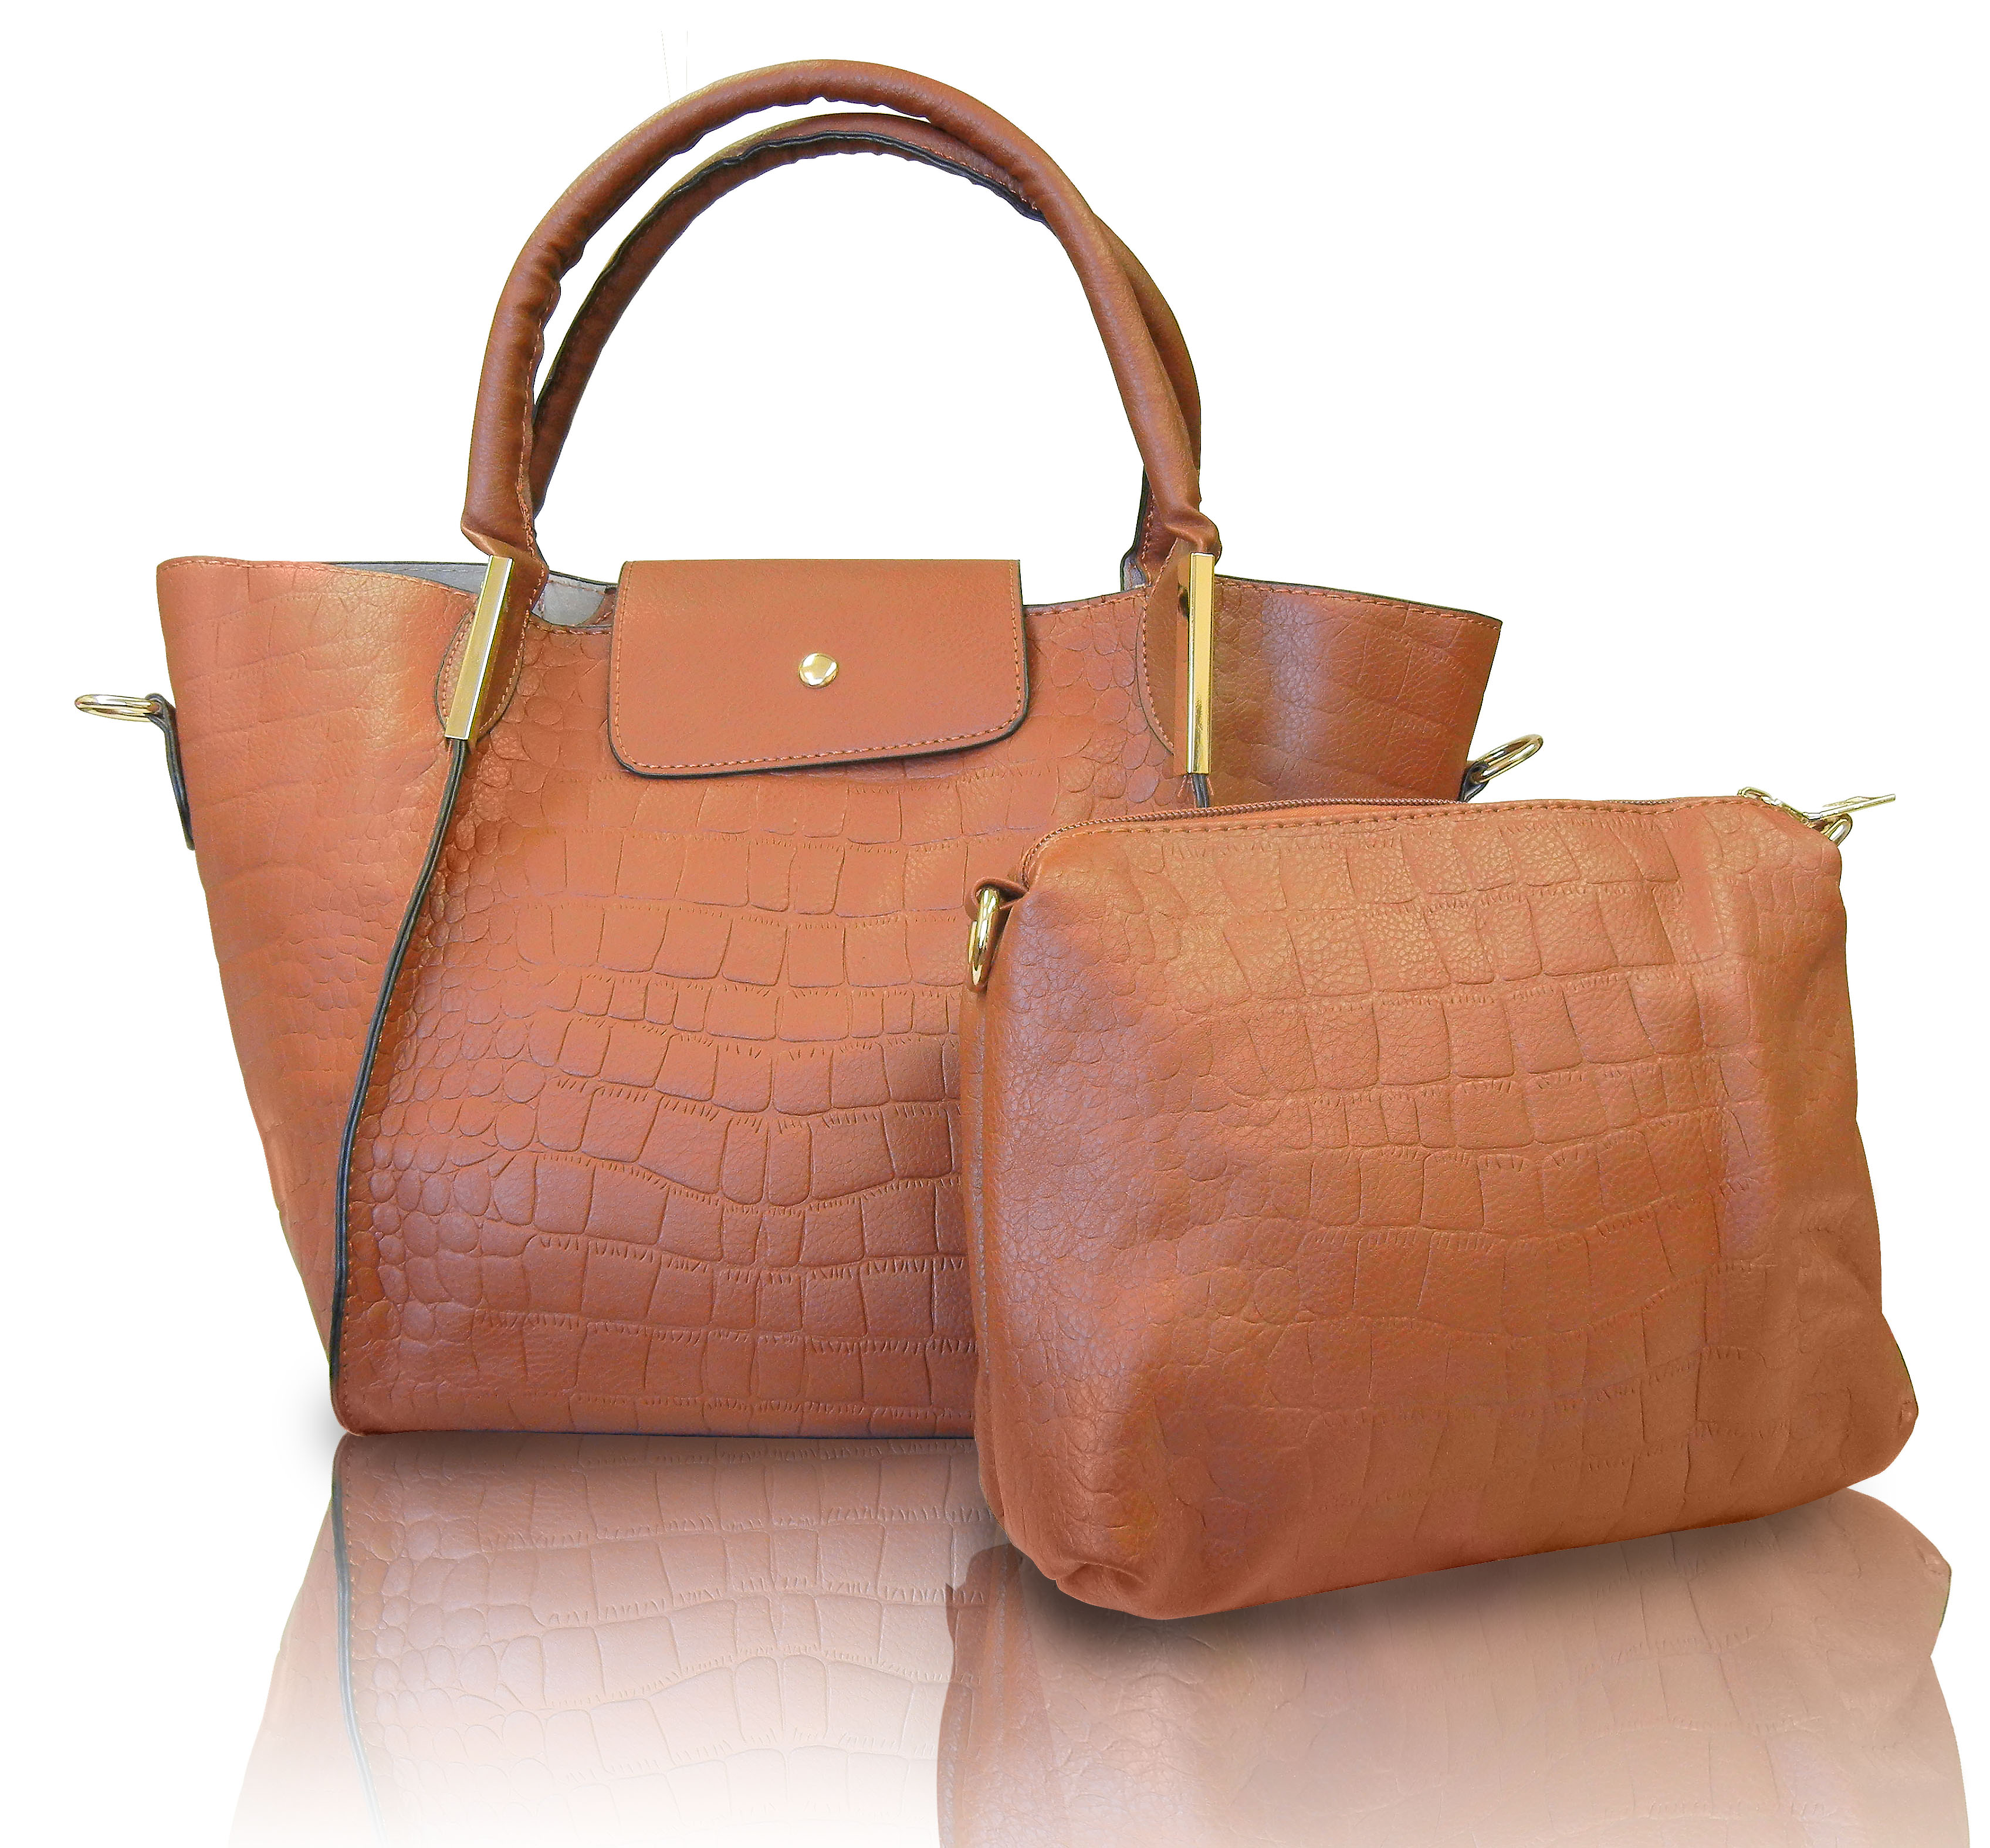 Tan / Coffee color Ladies Handbag with removable straps, satchel bag,with small companion bag,wallet,